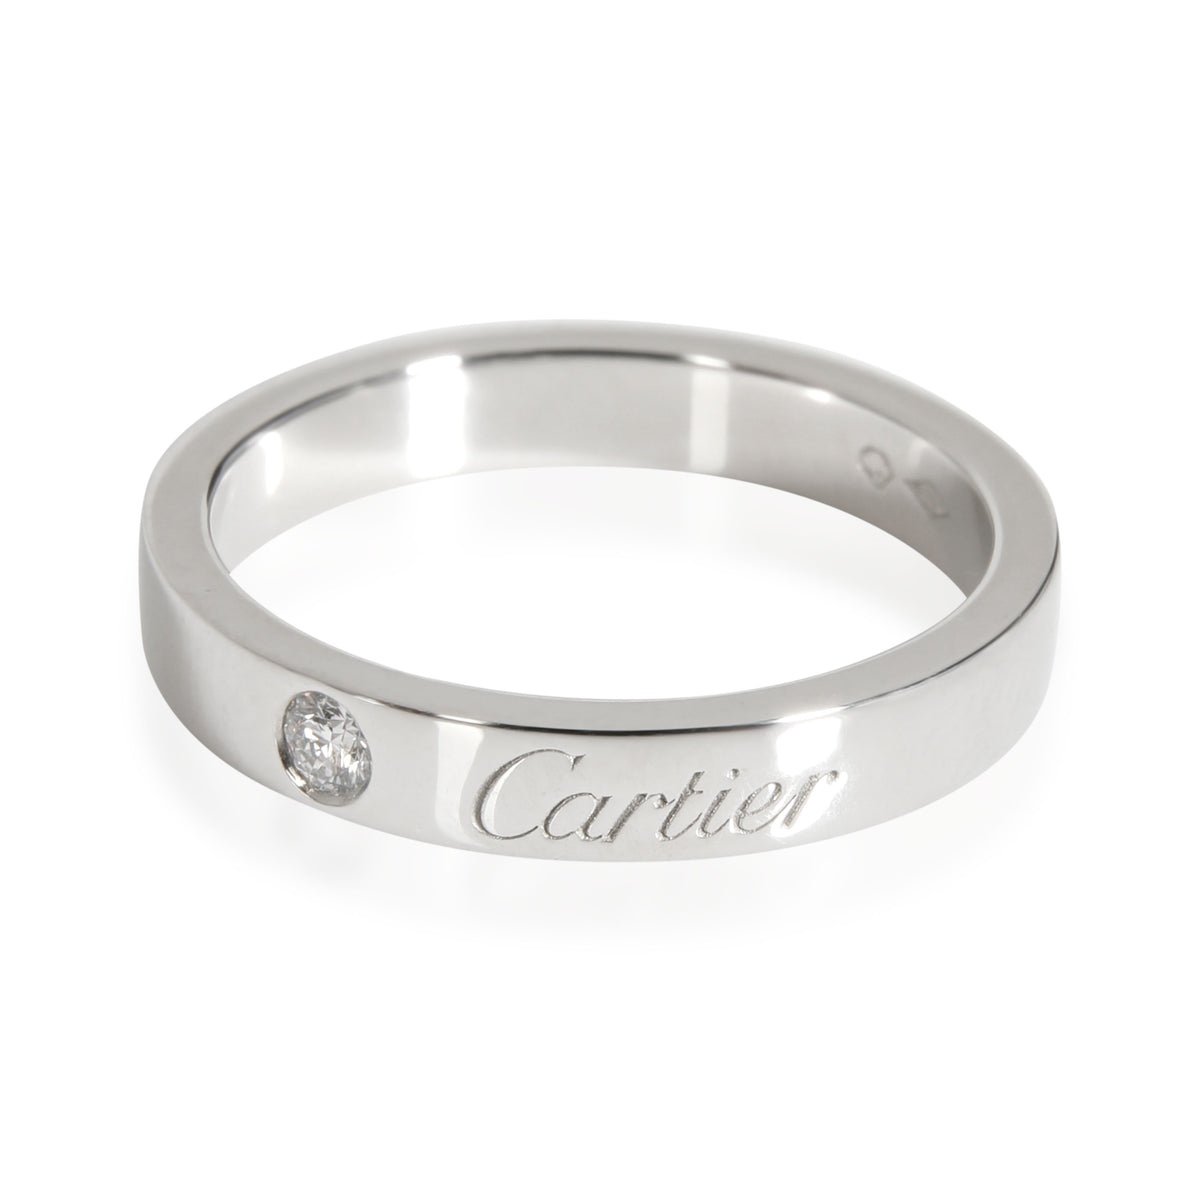 Cartier C De Cartier Diamond Band in Platinum 0.03 CTW